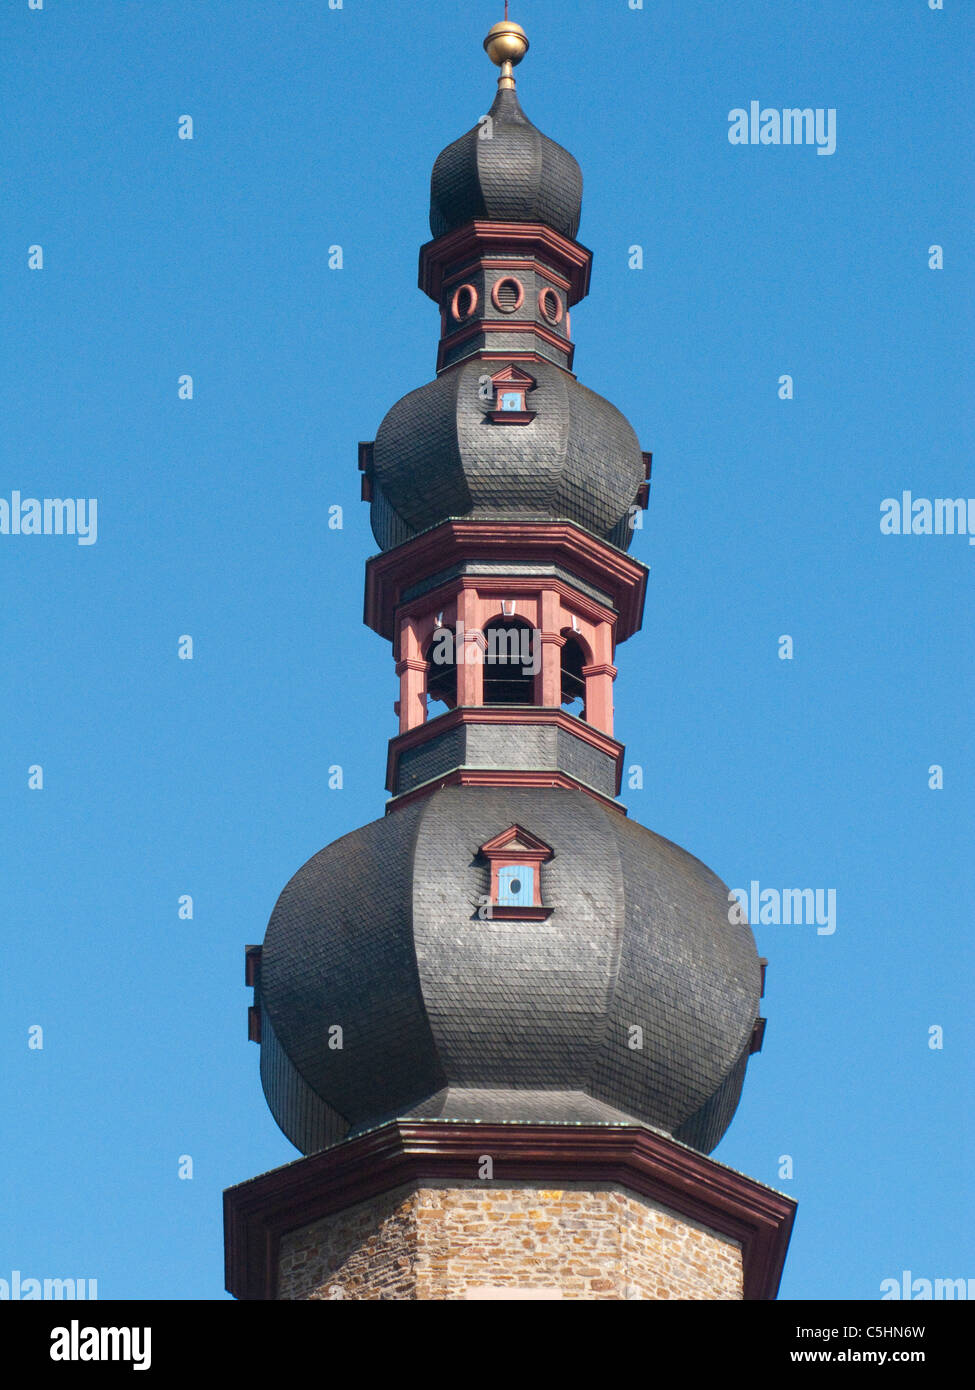 Pfarrkirche Sankt Martin,a Cochem Mosel, torre campanaria del Sankt Martin chiesa, Cochem, Moselle Foto Stock